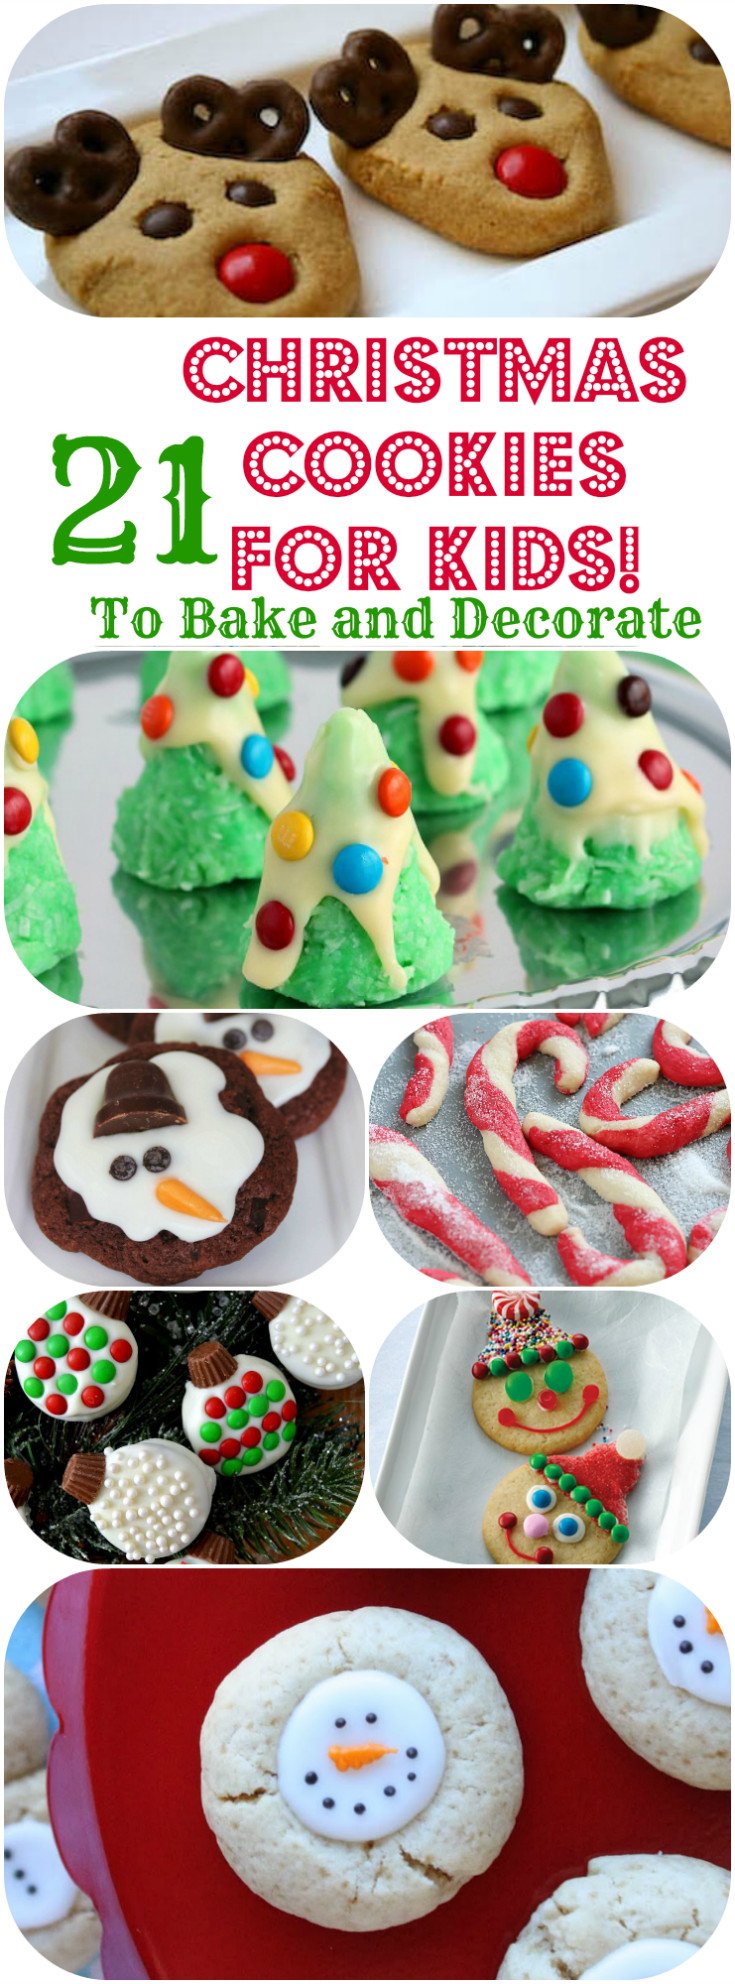 Christmas Baking Ideas For Kids
 21 Christmas Cookies Kids Can Bake